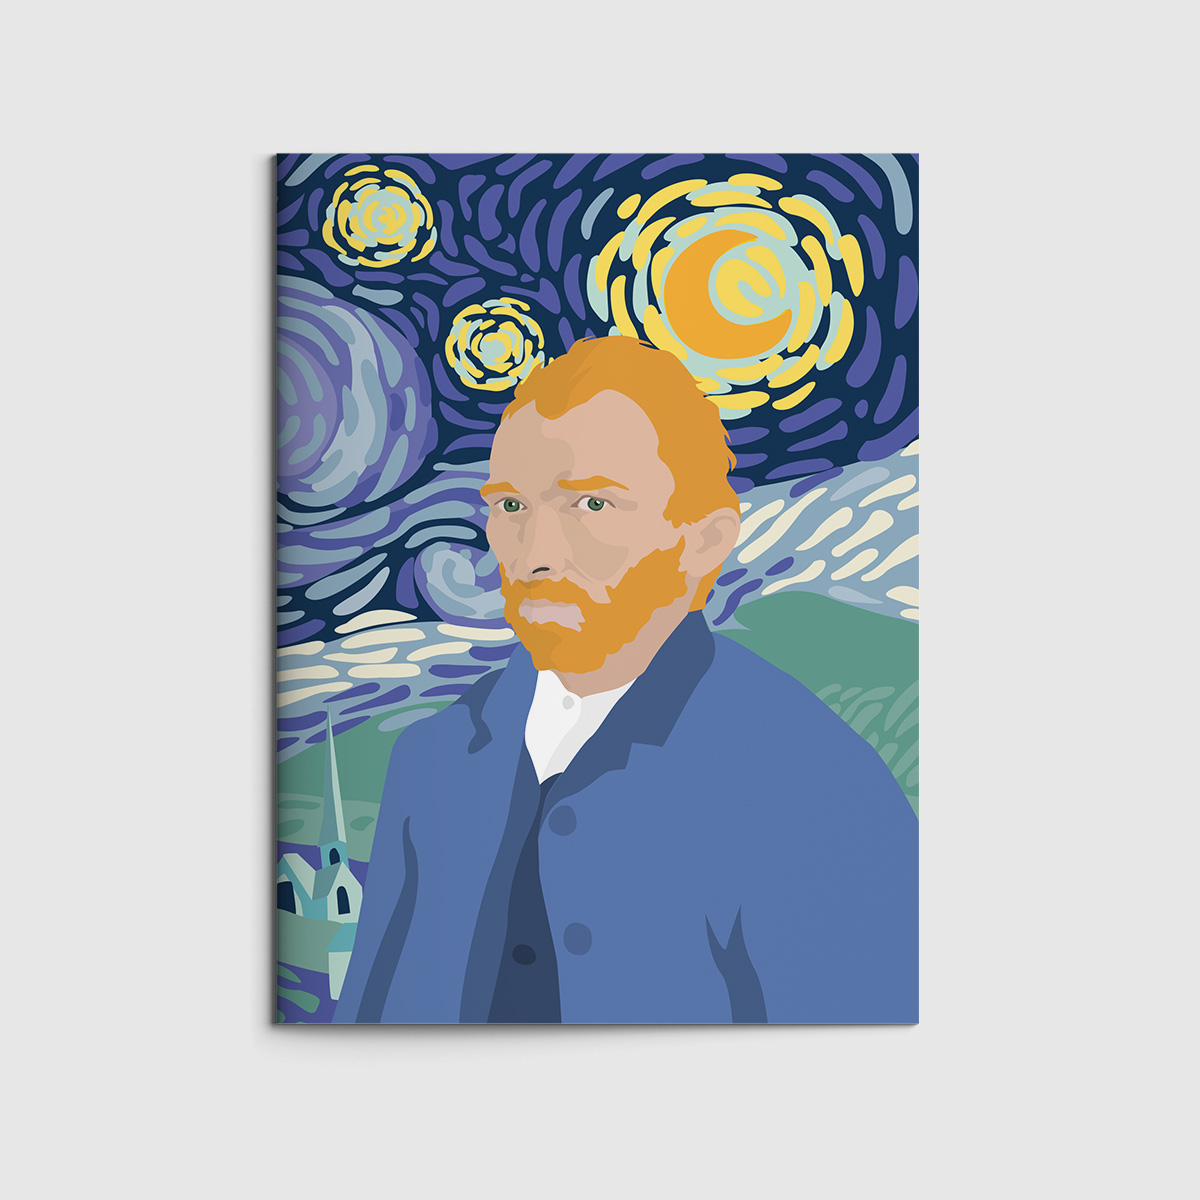 Heft A6 - museum art - Vincent van Gogh "starry night"